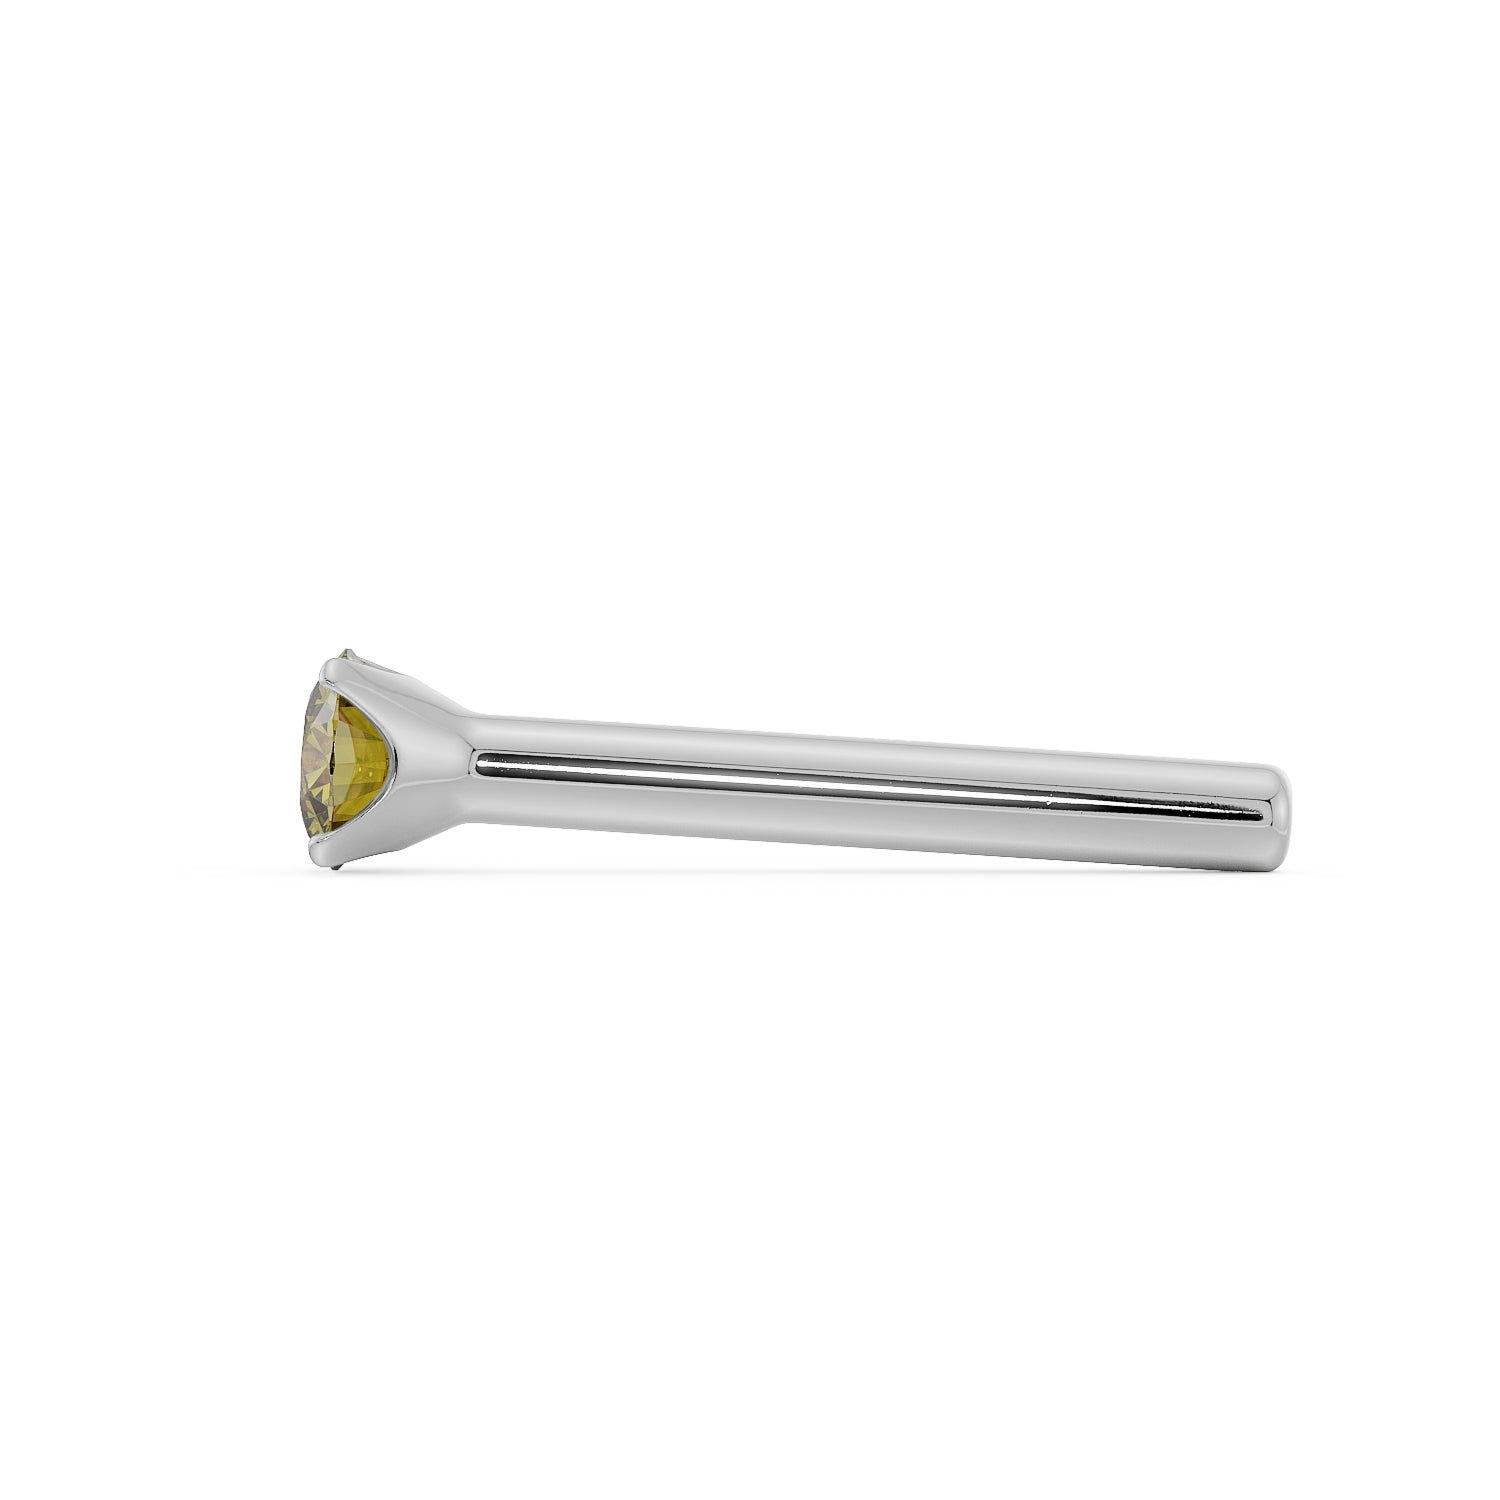 2mm Yellow Diamond Prong Nose Ring Stud